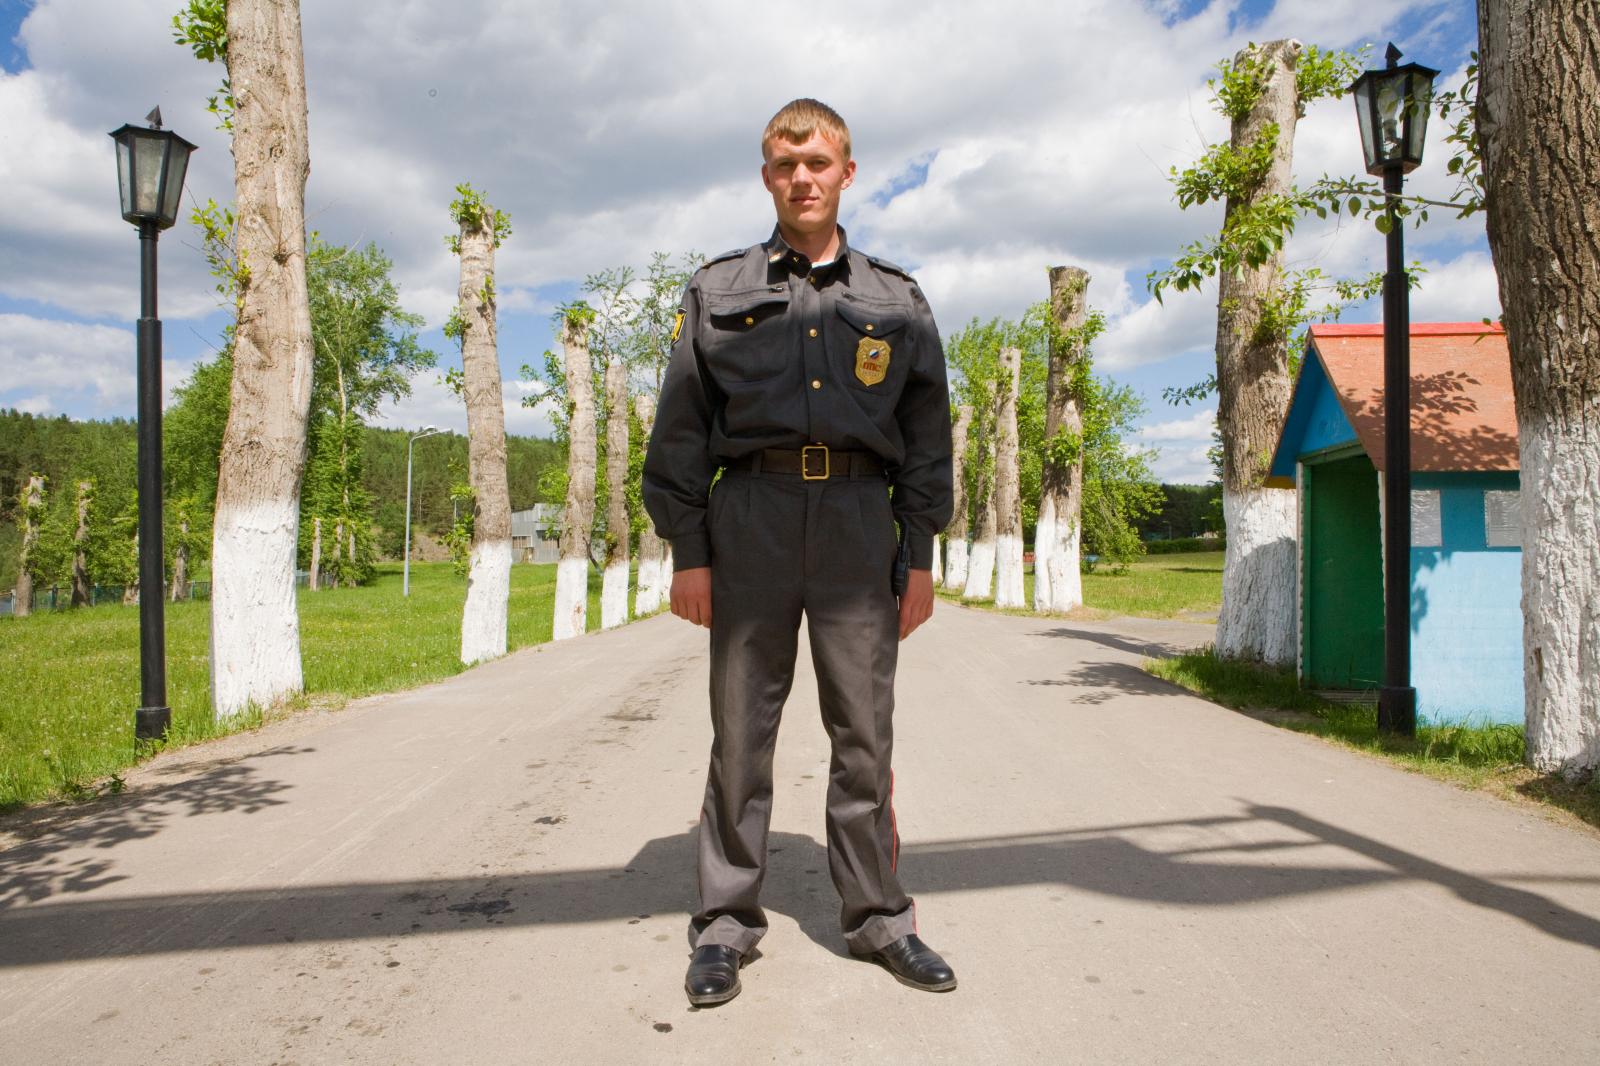 Security Guard, The Urals, Russia